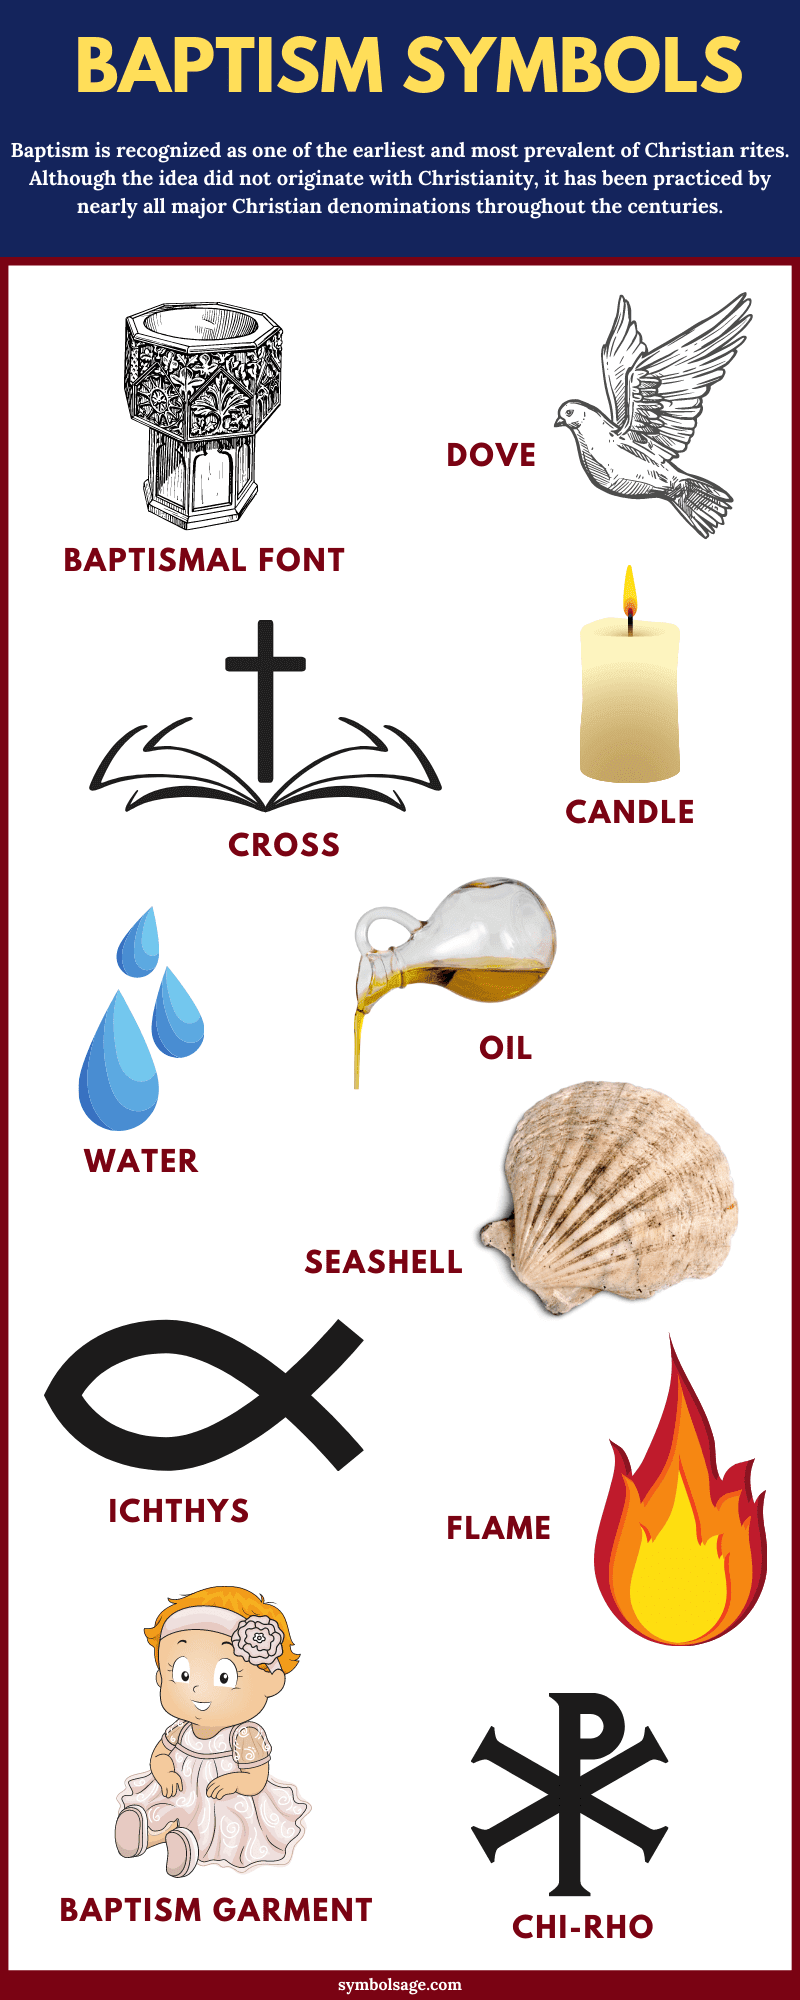 Baptism symbols list